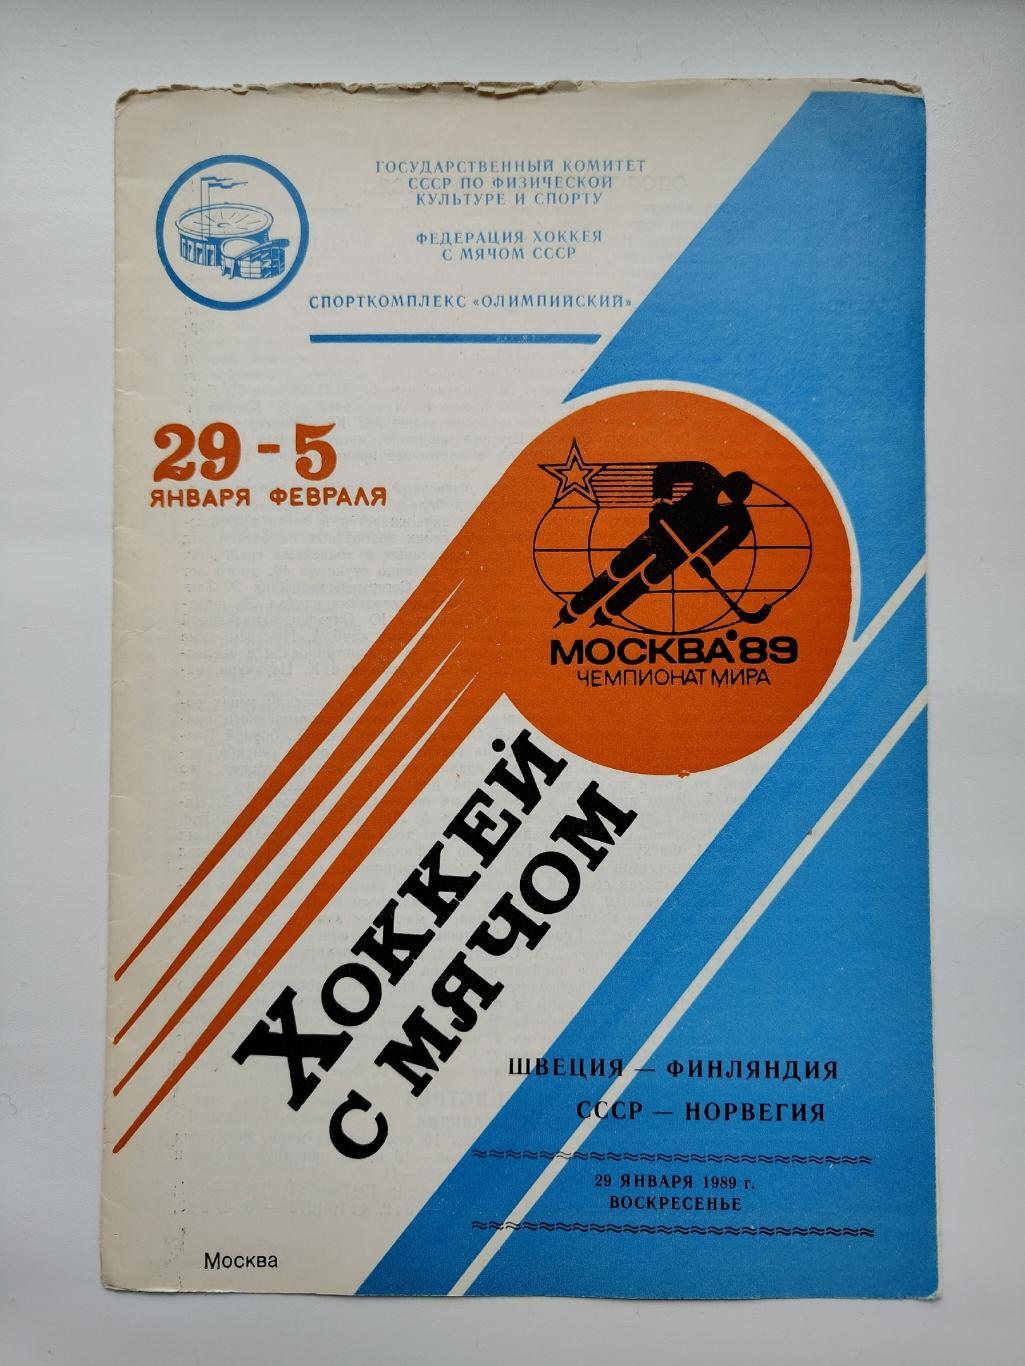 Хоккей с мячом Москва 29.01 1989 Швеция Финляндия СССР - Норвегия Чемпионат мира